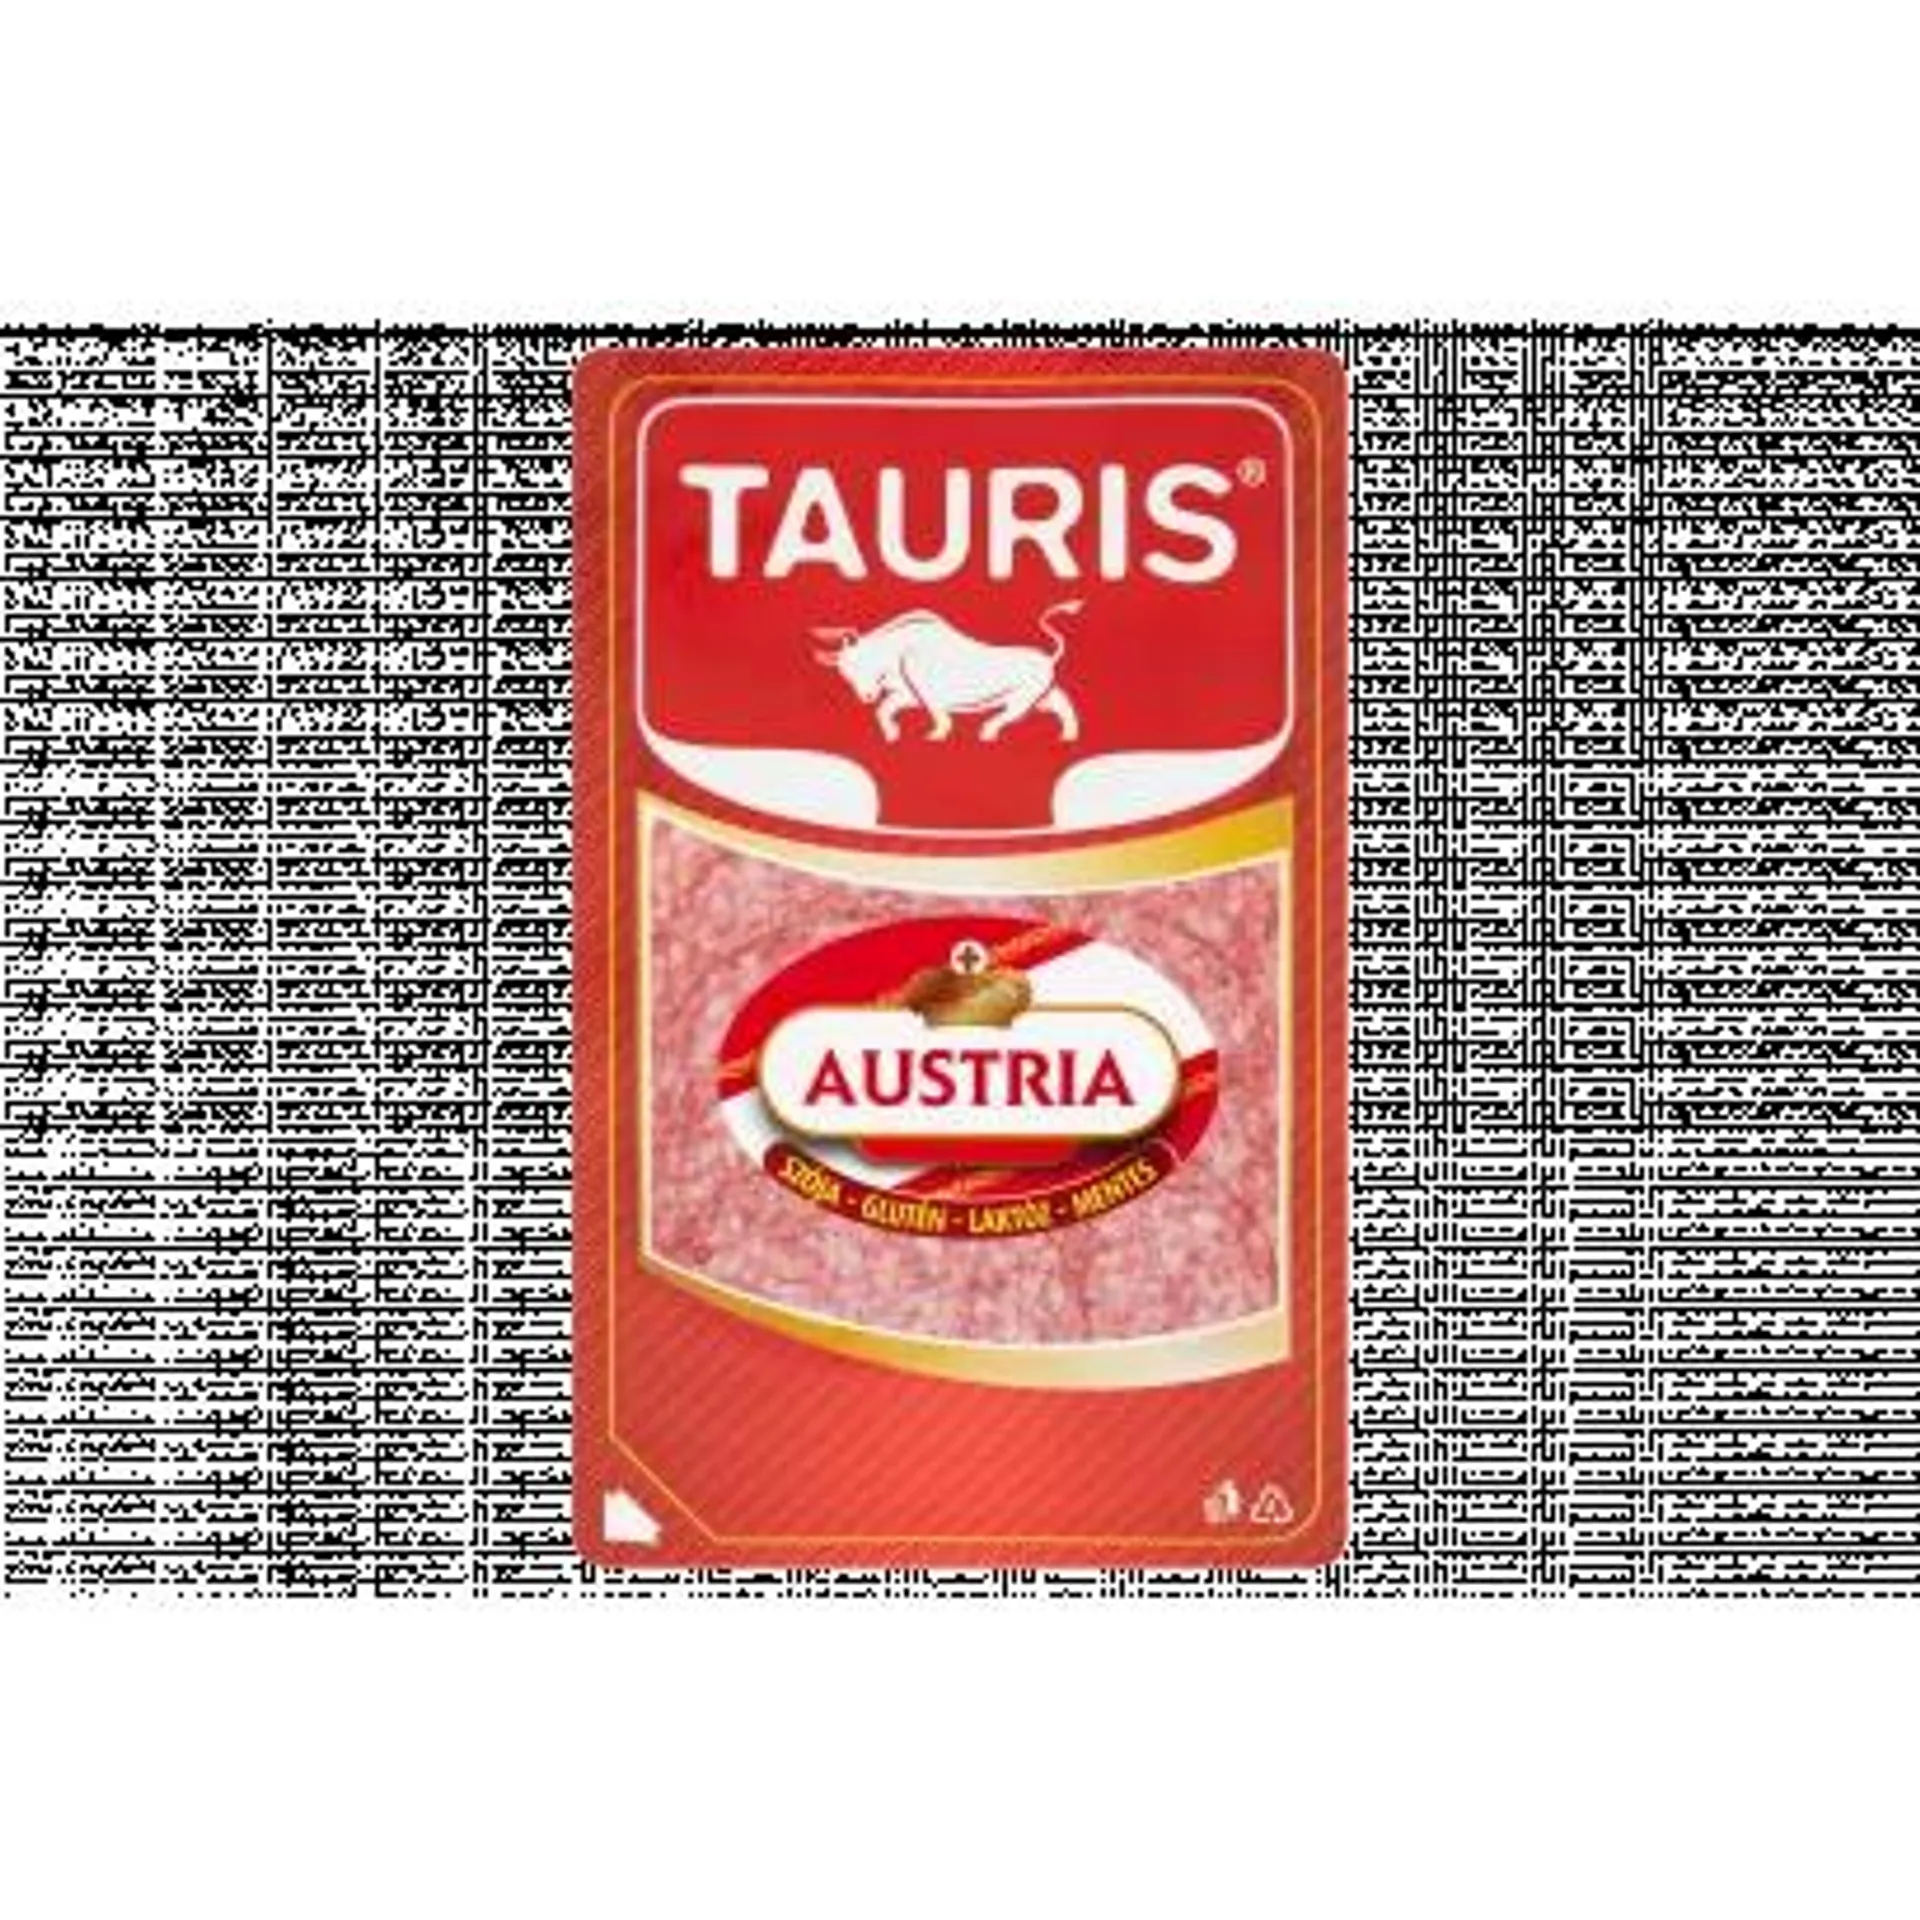 Tauris Austria Cold Cuts 55 g